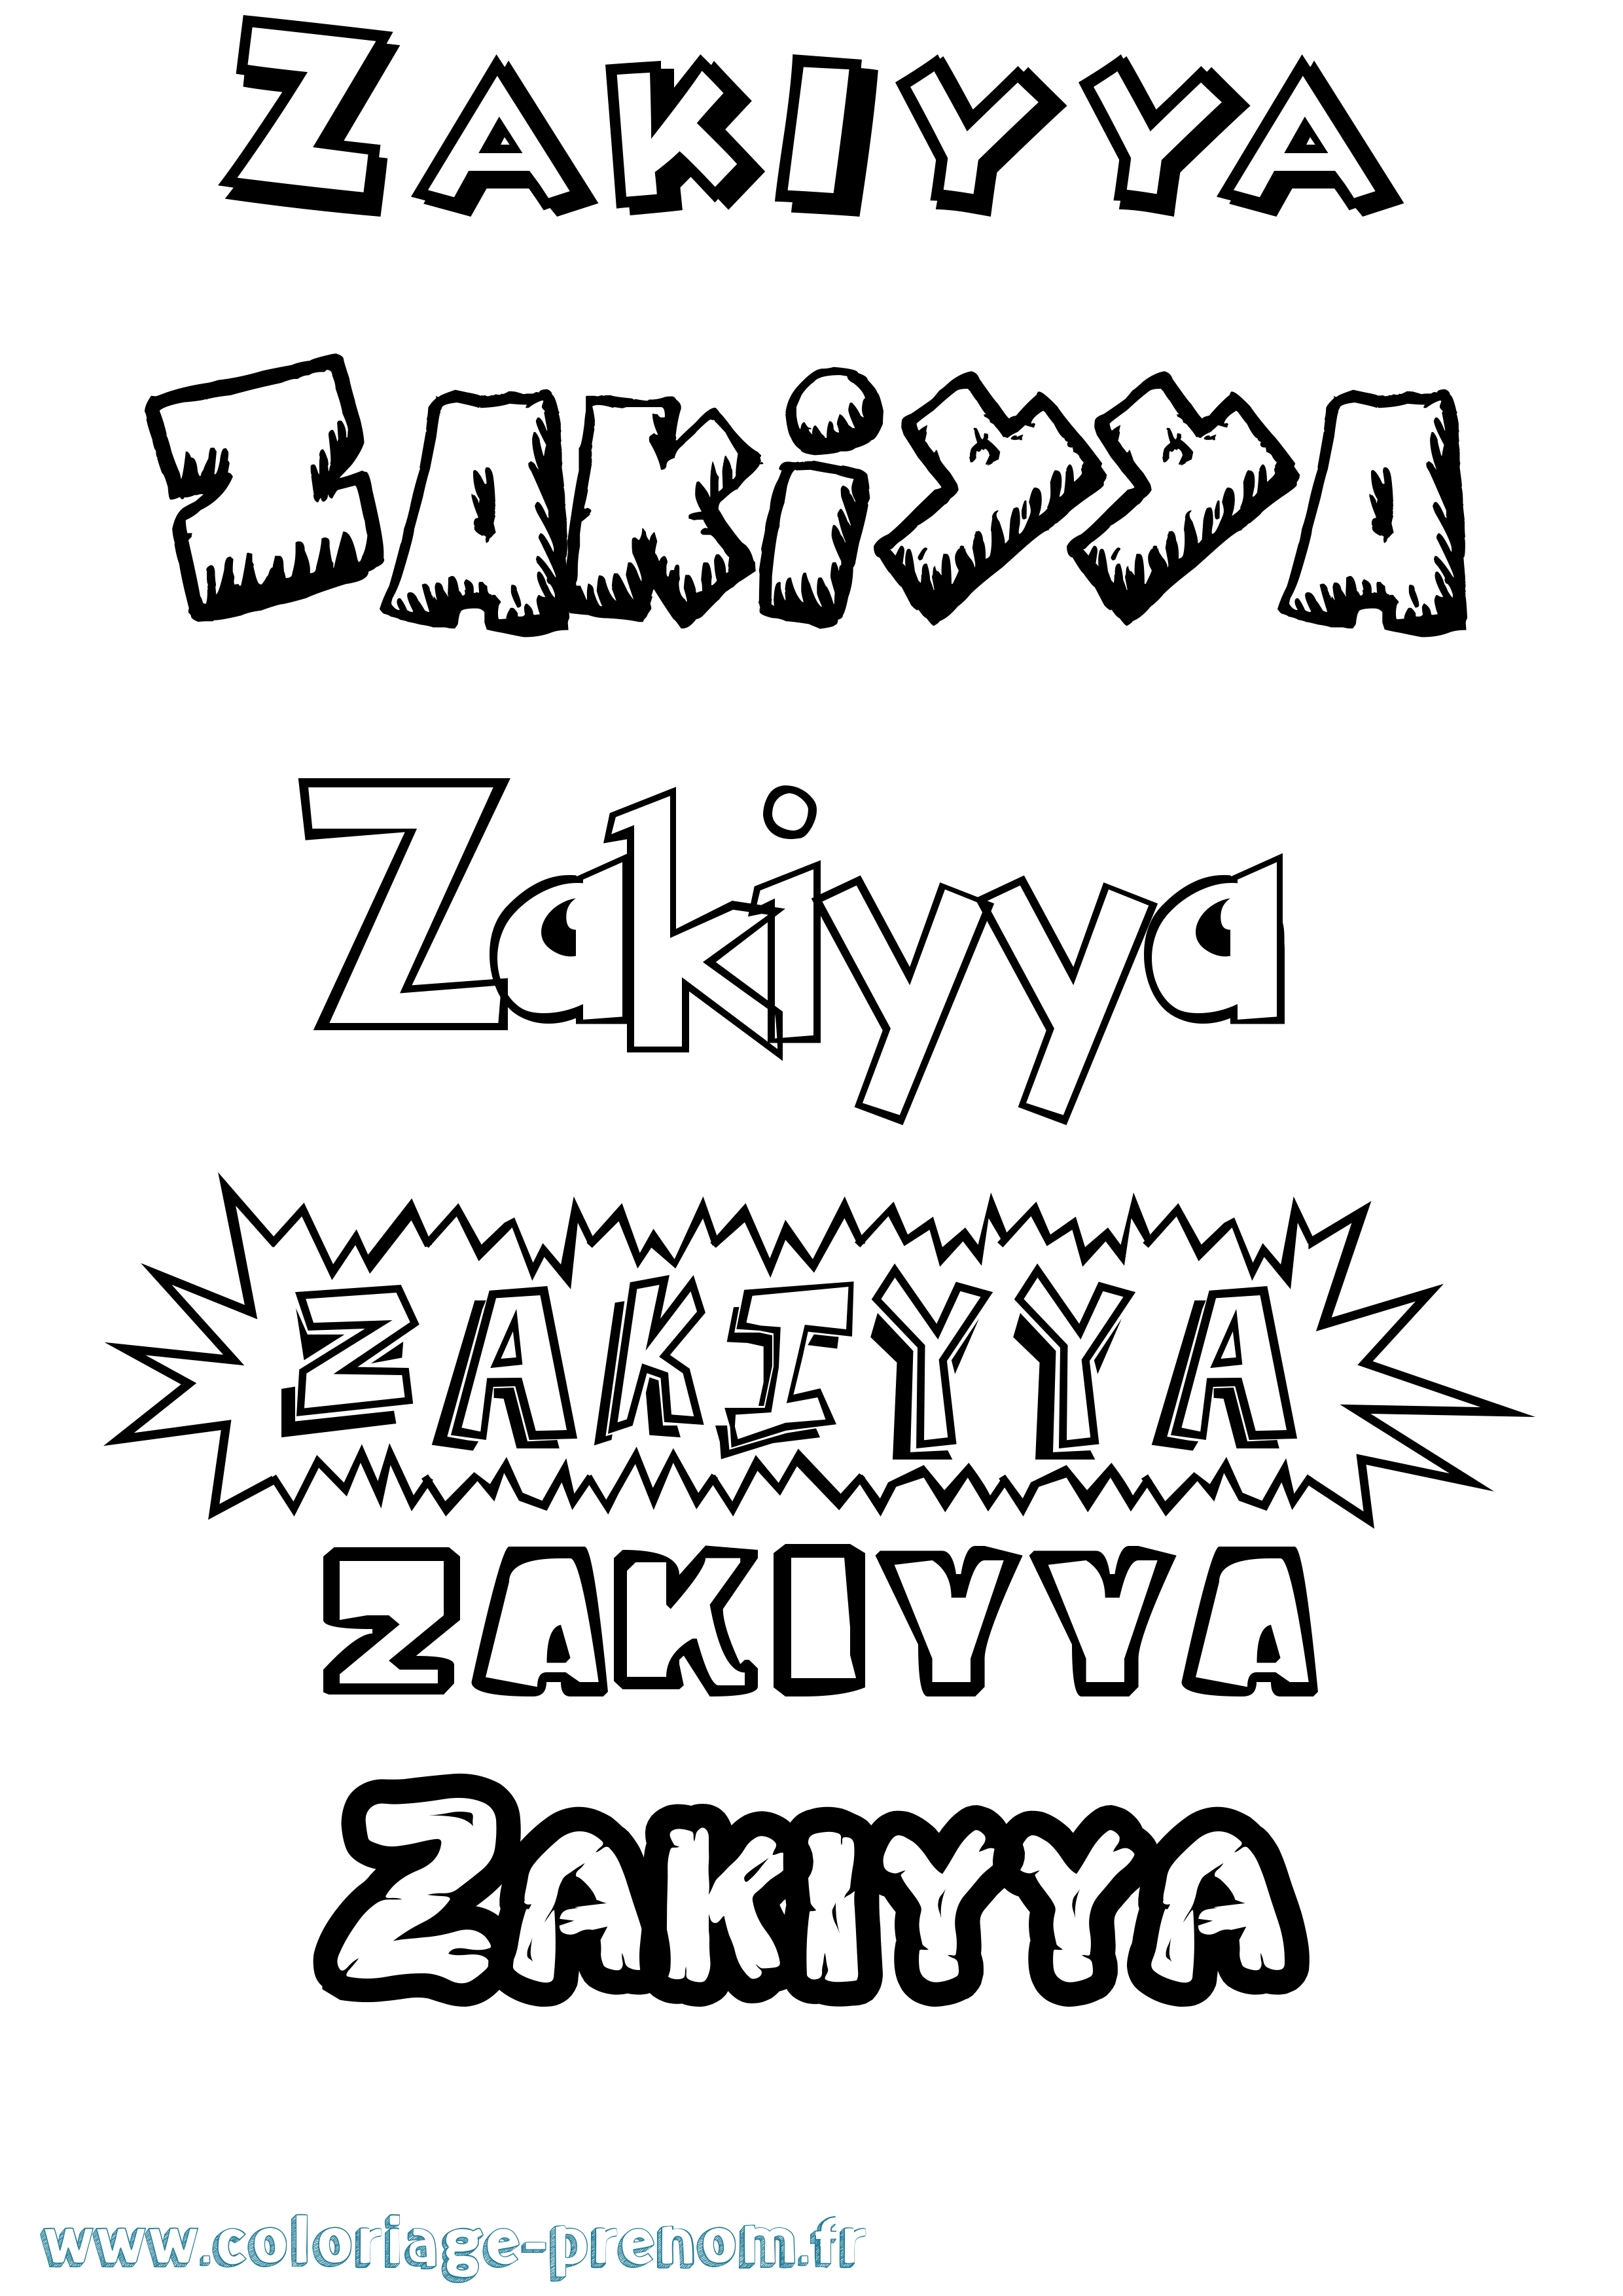 Coloriage prénom Zakiyya Dessin Animé